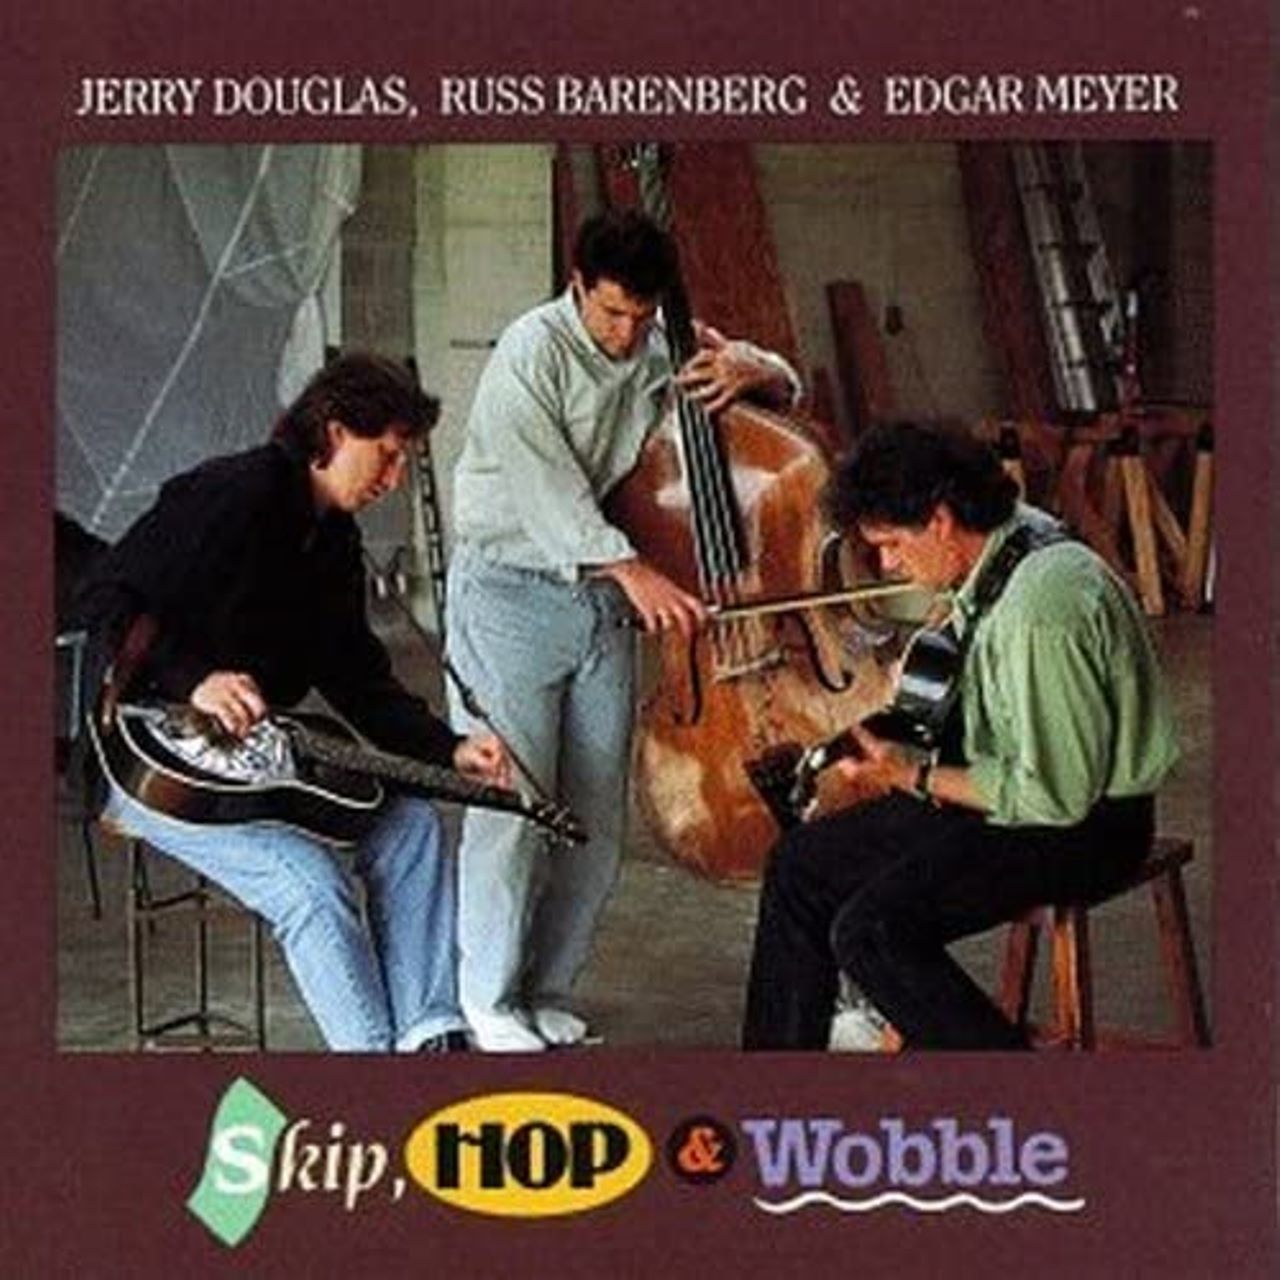 Jerry Douglas, Russ Barenberg, Edgar Mayer – Skip, Hops & Wooble cover album